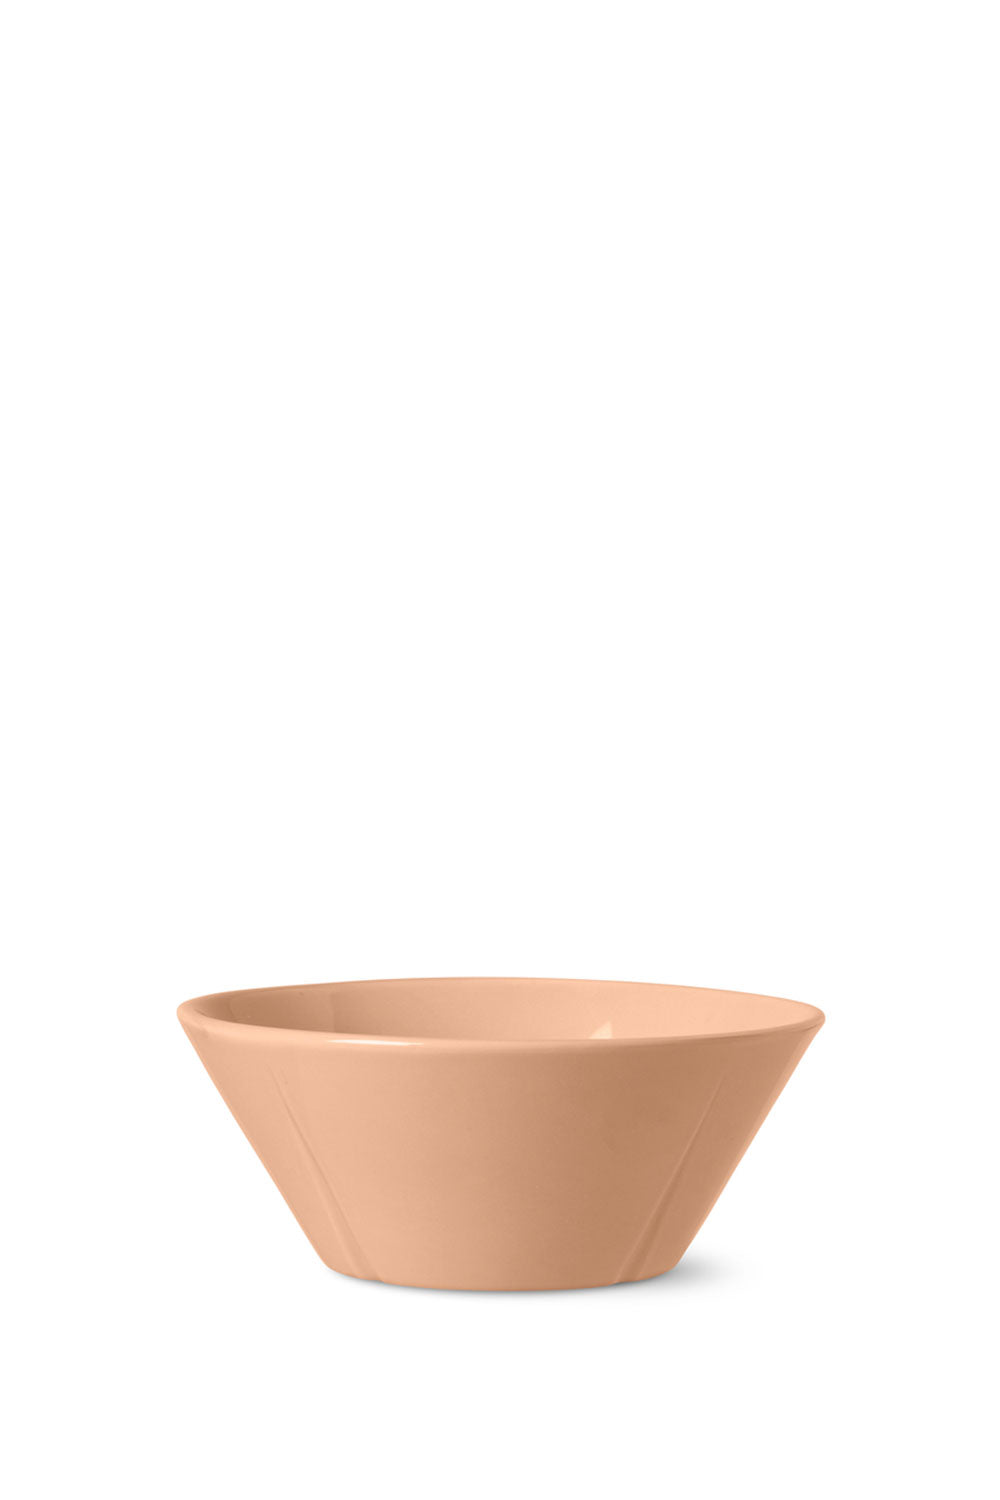 Grand Cru Bowl,15 cm, Blush